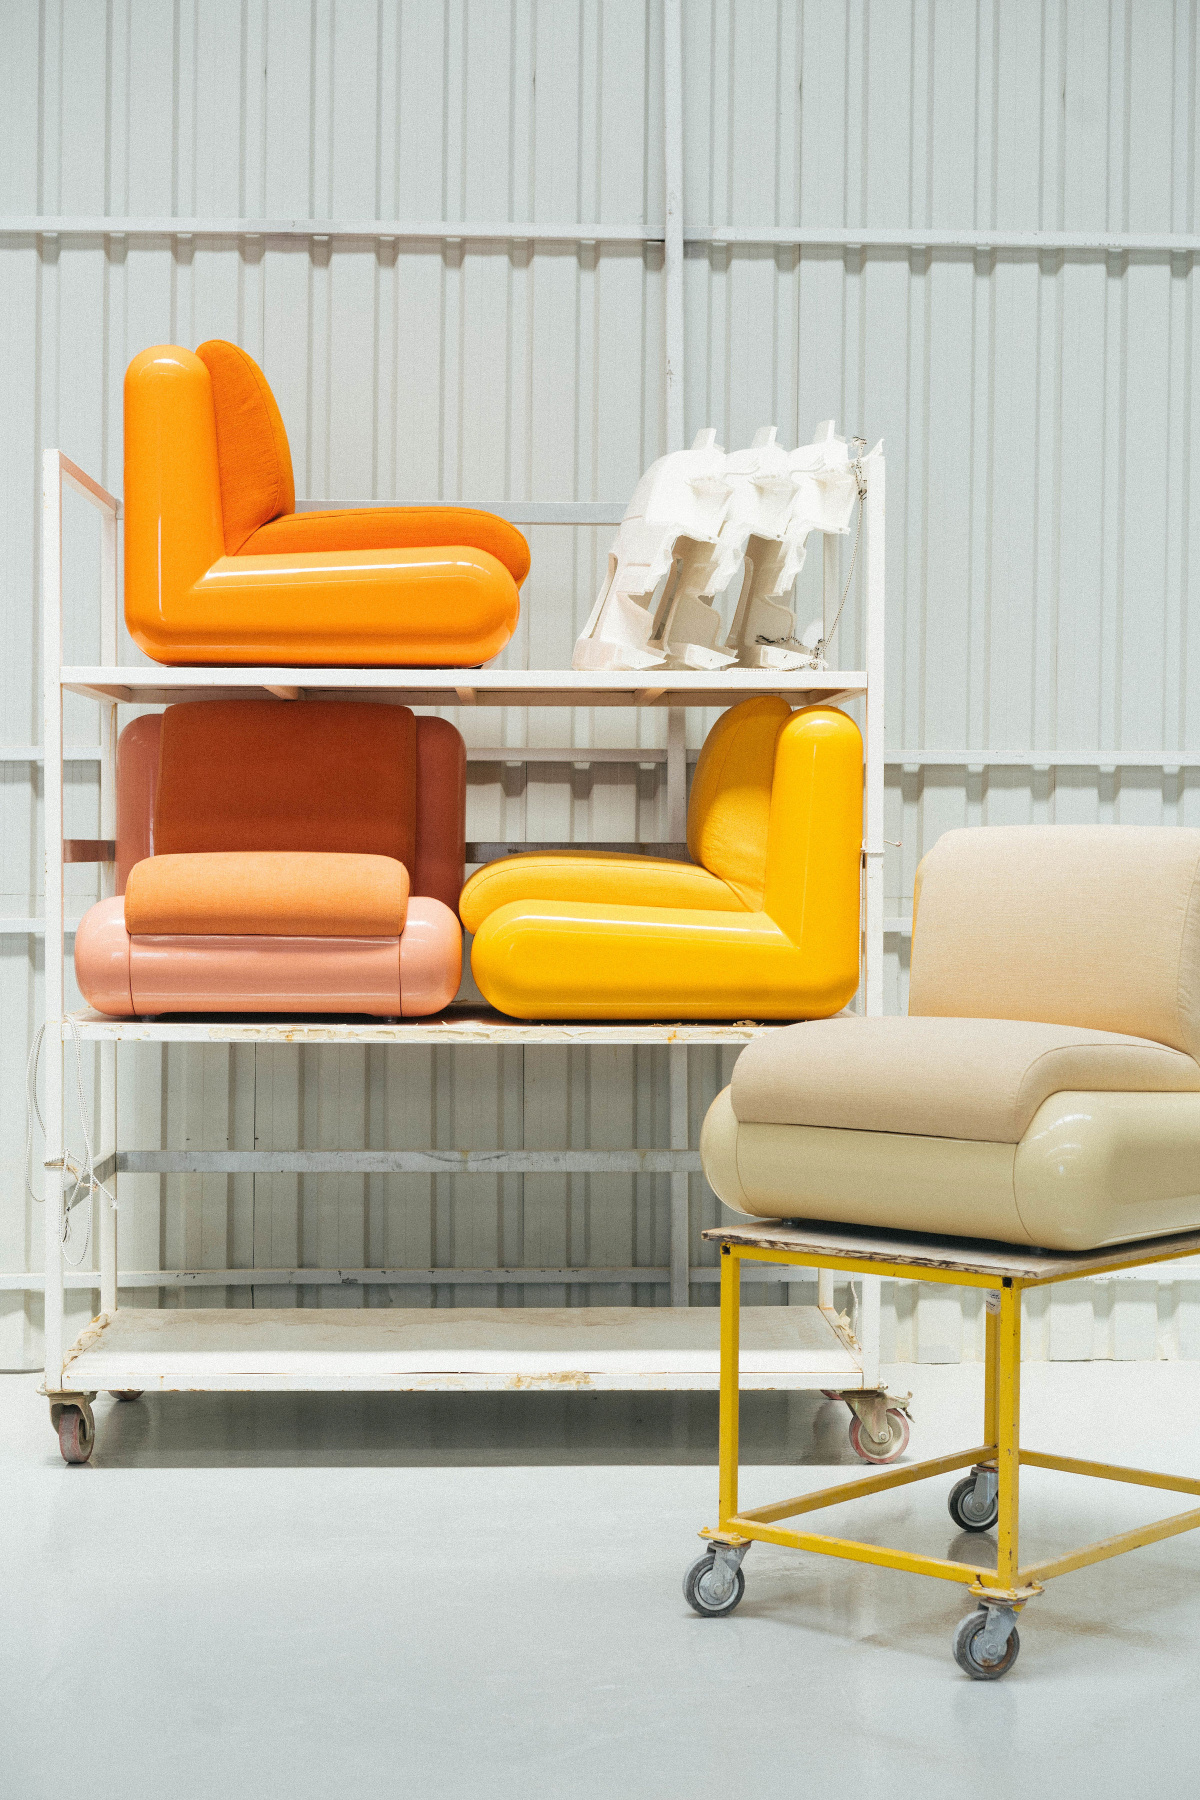 Holloway Li x Uma - T4 Collection chairs on shelf